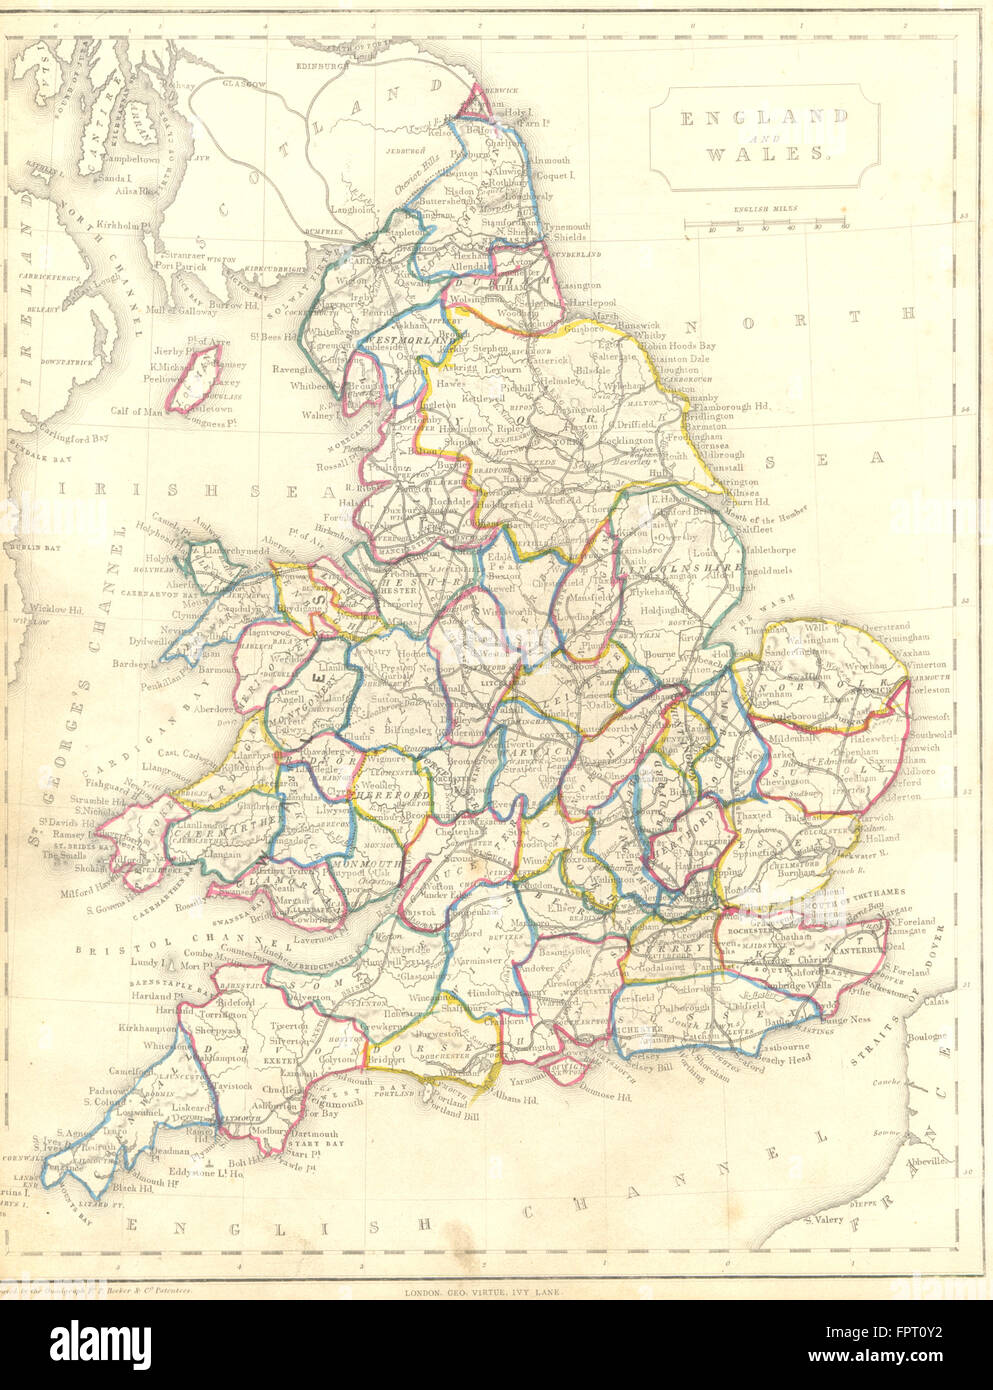 UK: England Wales: Becker, 1848 antique map Stock Photo